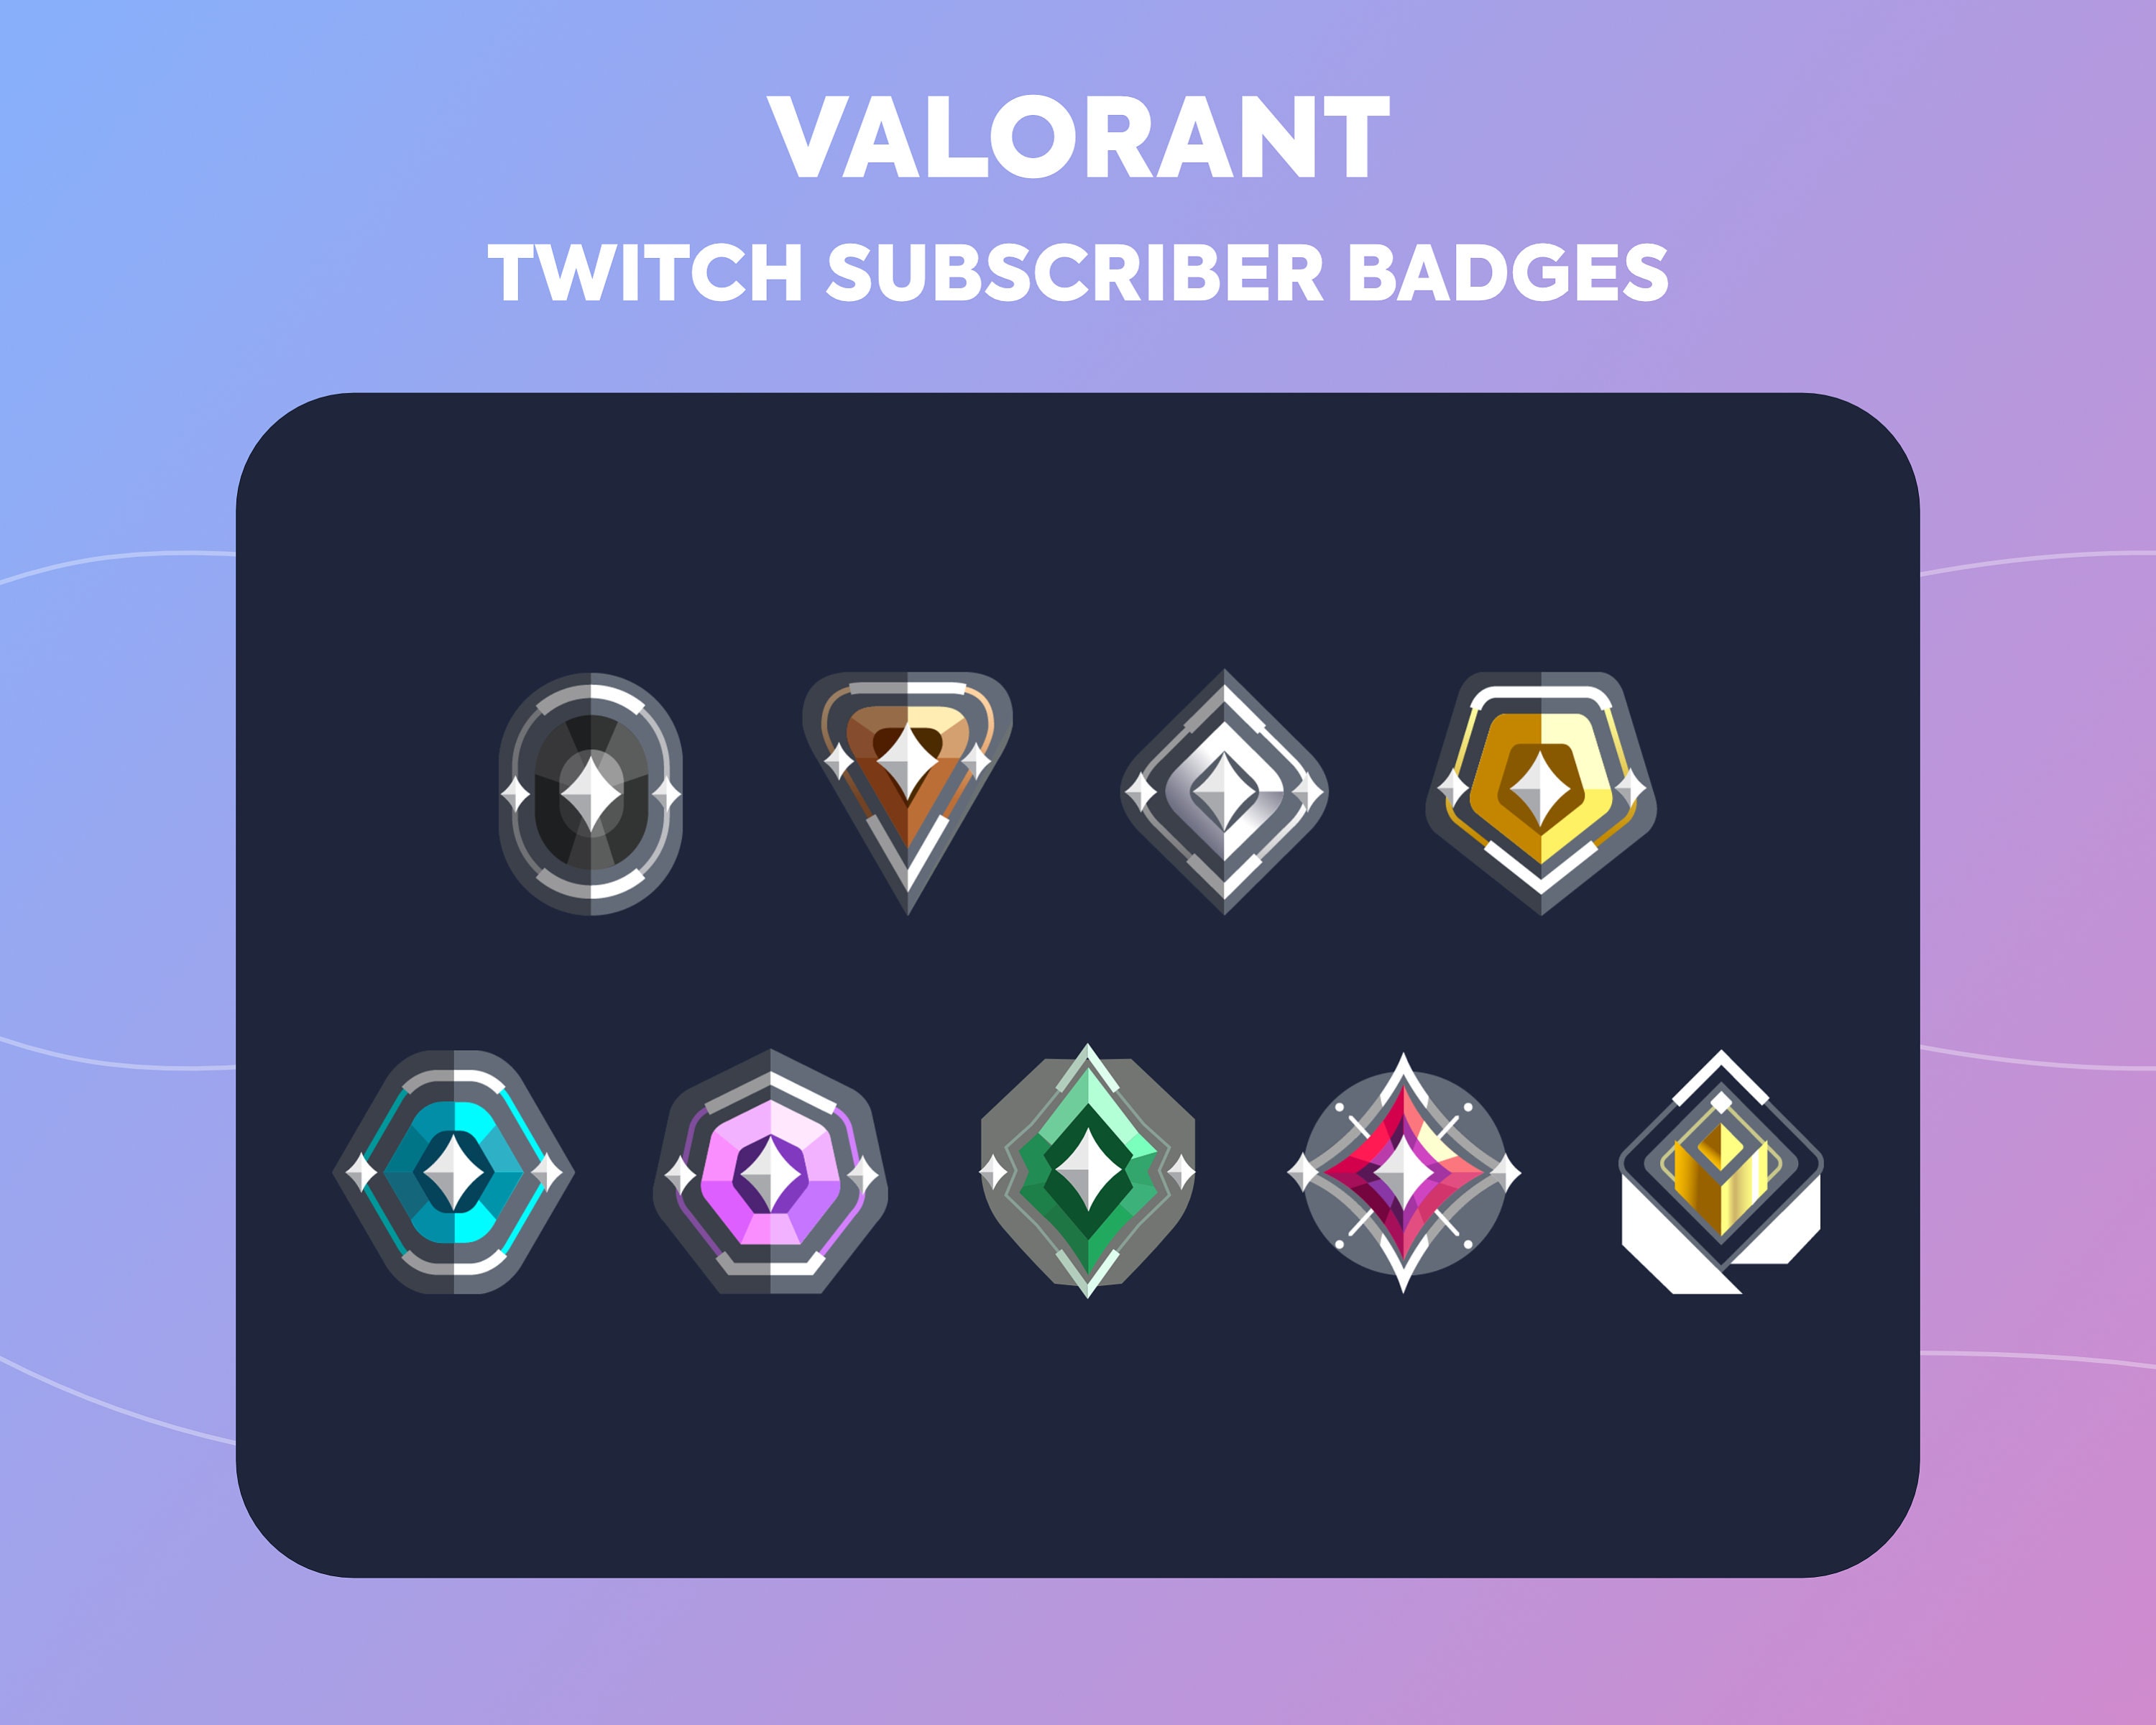 Twitch Sub Badges / Cheer Bit Badges Overwatch Ranks 